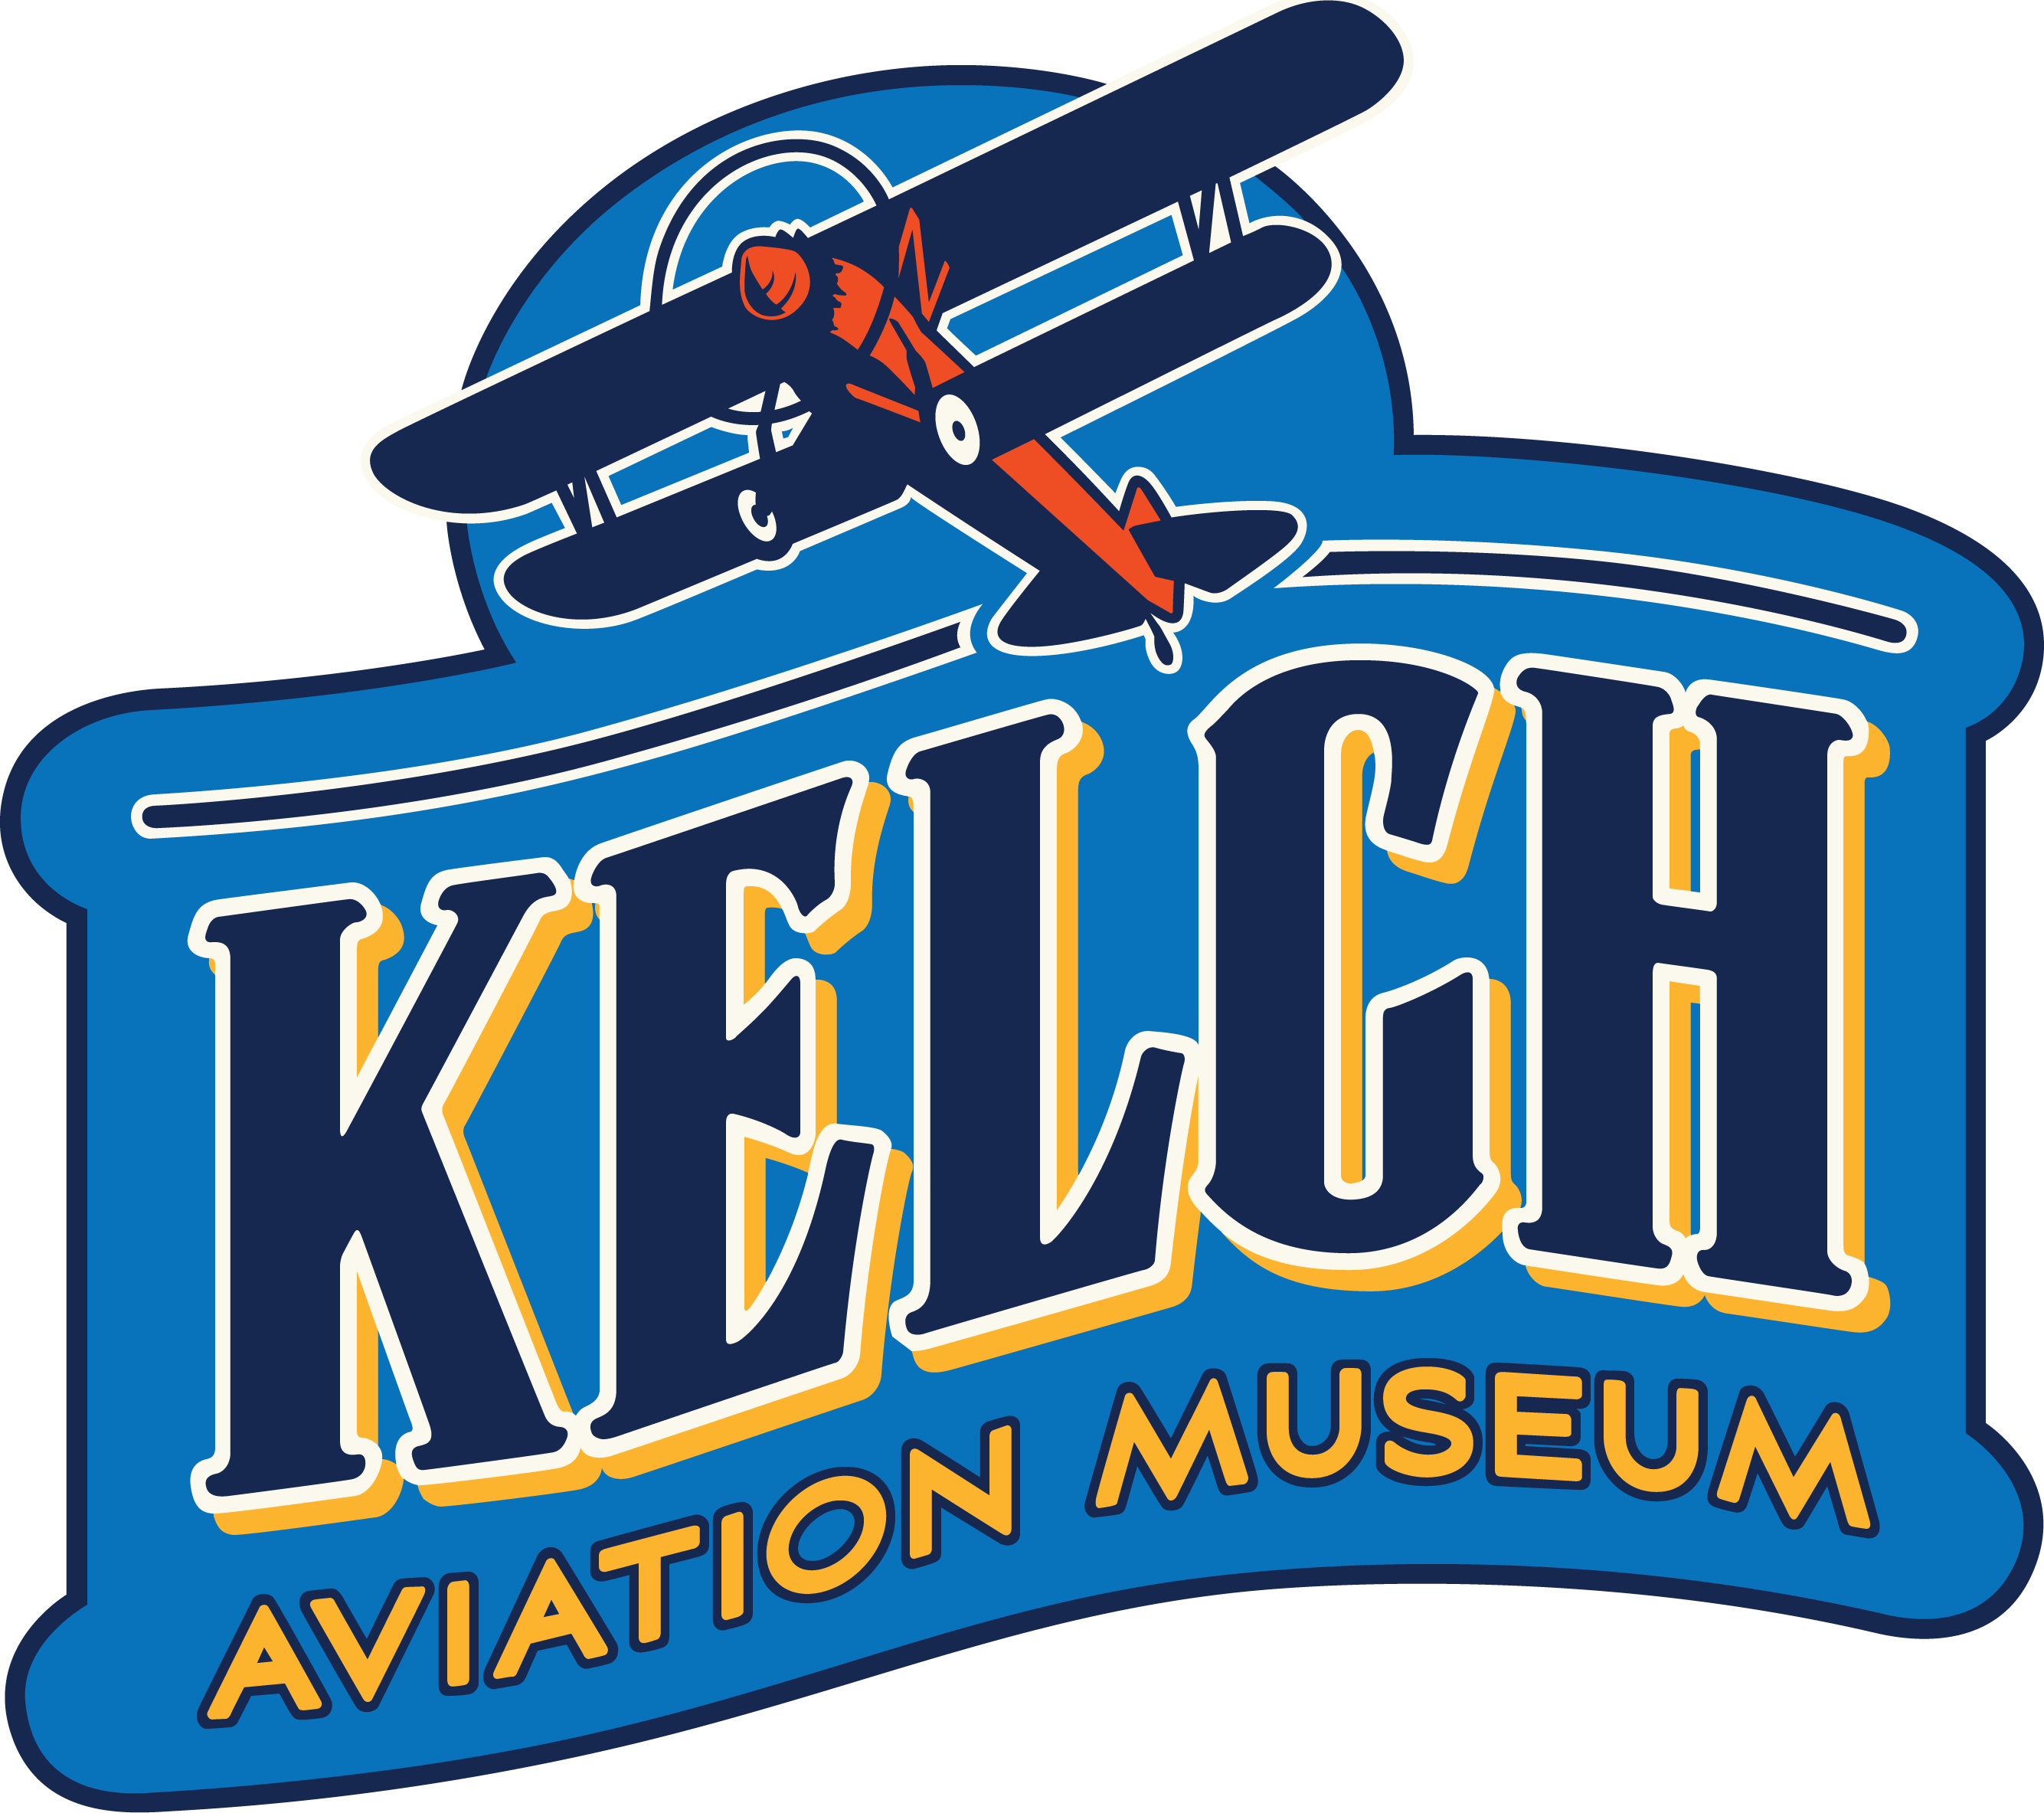 Kelch Aviation Museum